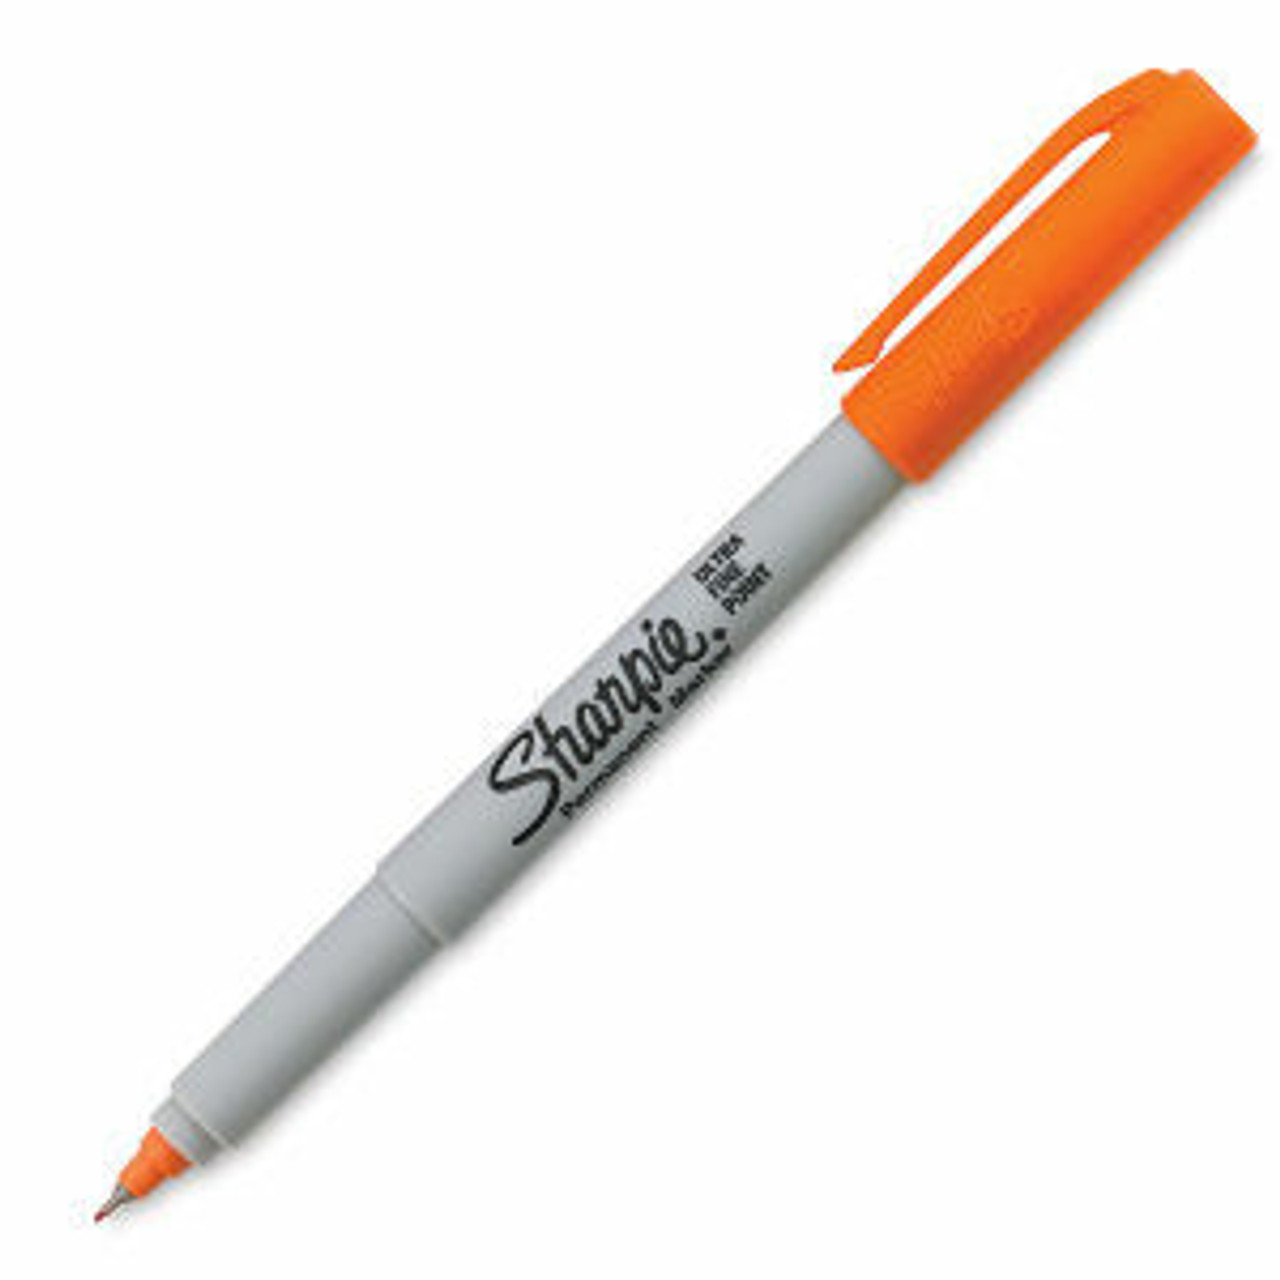 Sharpie Marker - Ultra-Fine - Orange - Sam Flax Atlanta